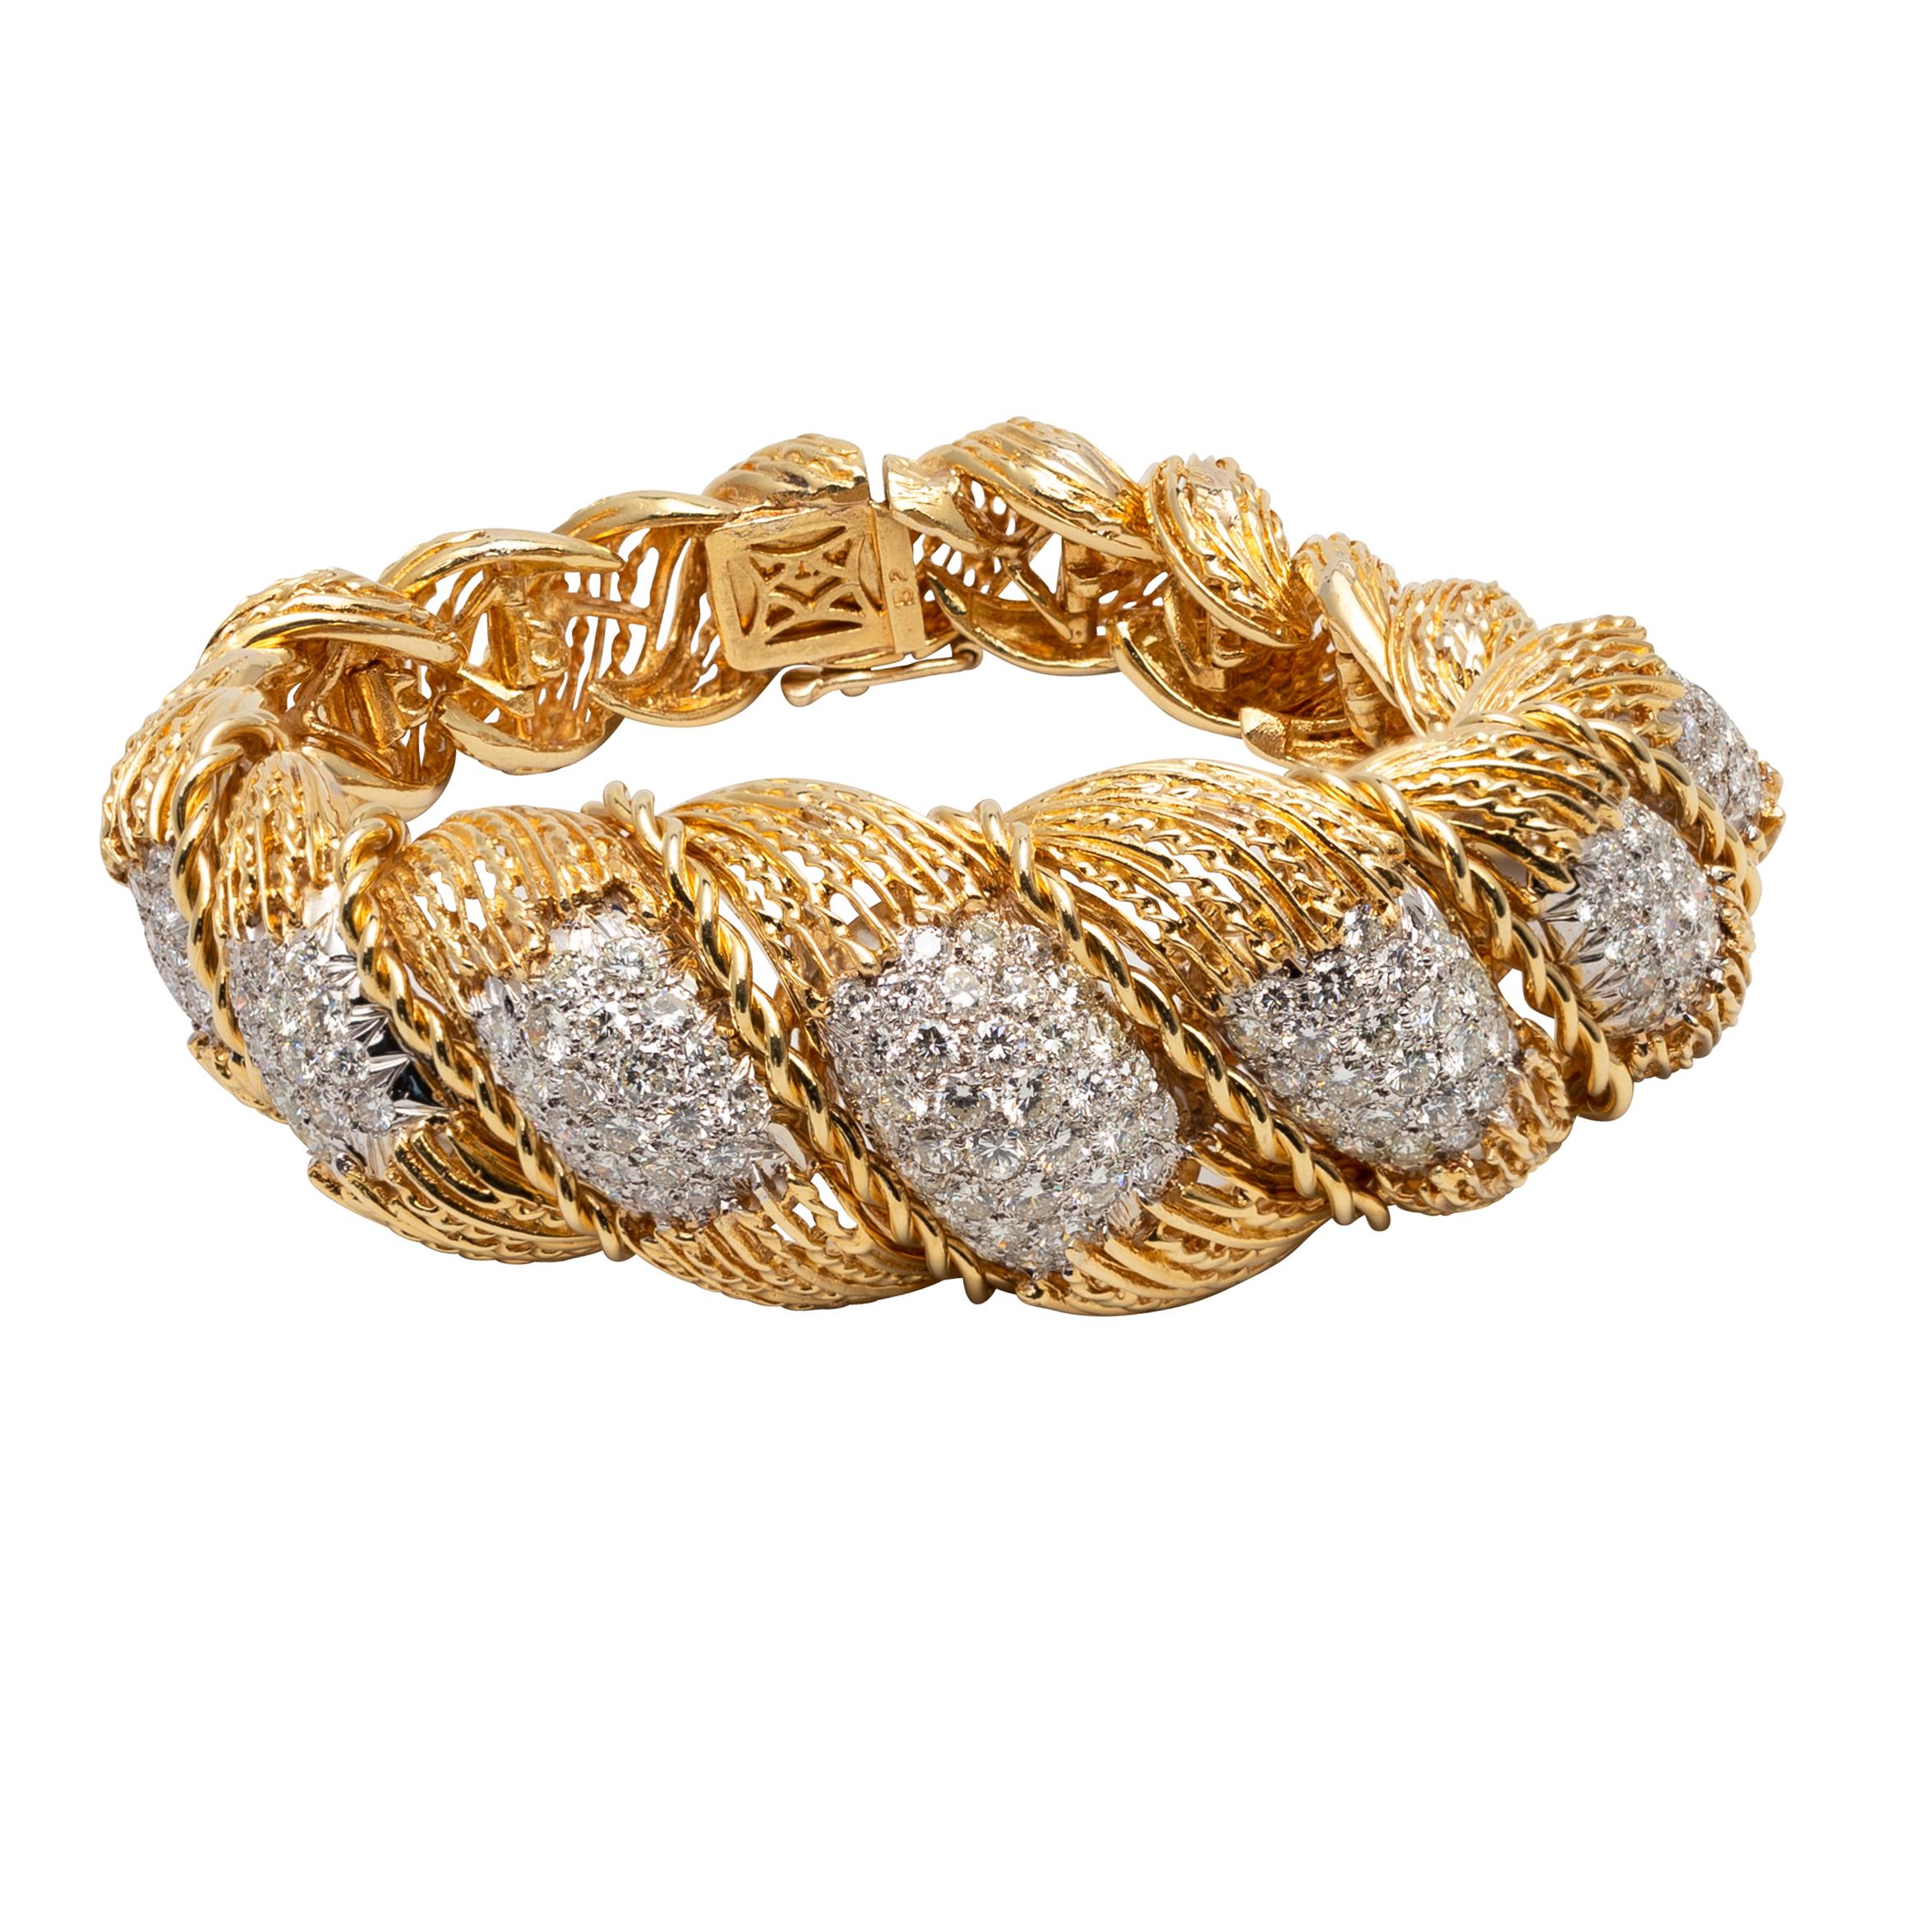 Hammerman Brothers 6.50 Carat Diamond Semi-Flexible Bracelet in Yellow Gold 1